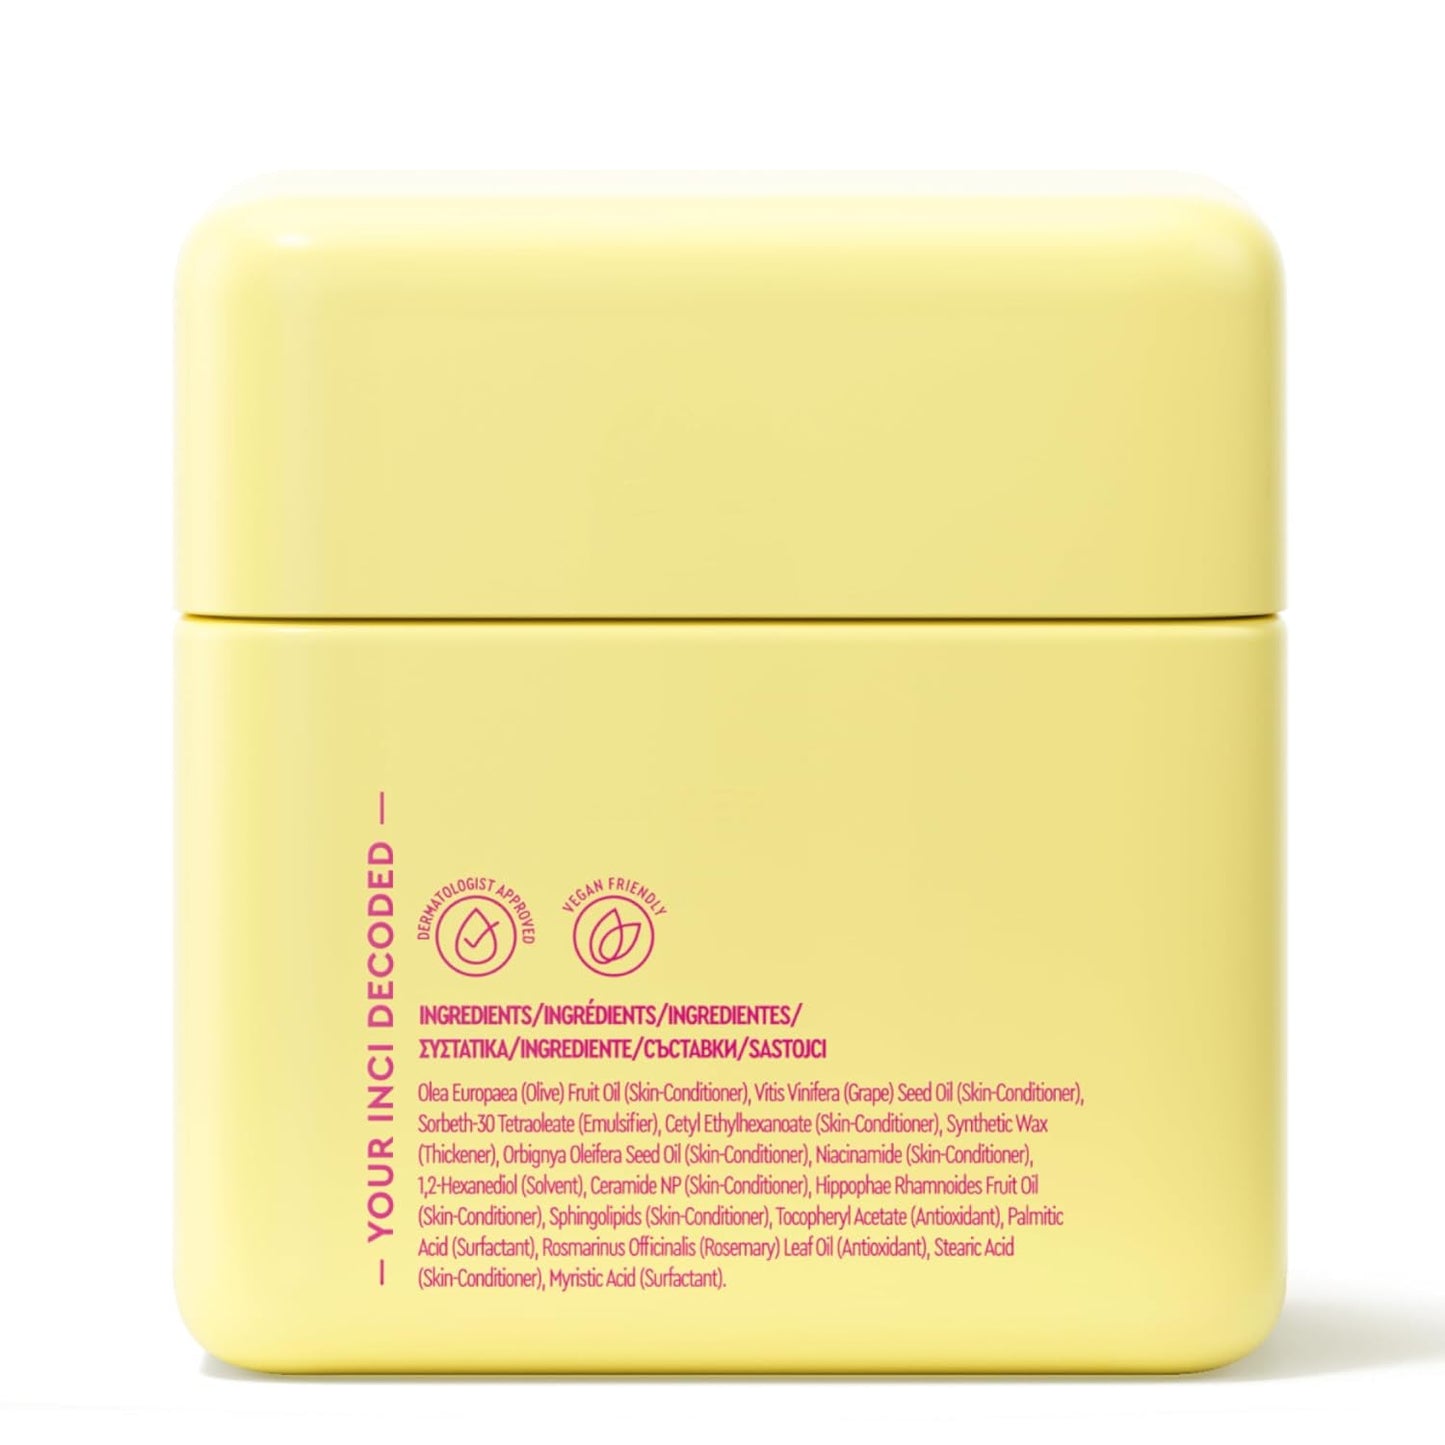 BYOMA - Melting Balm Facial Cleanser | 60 g